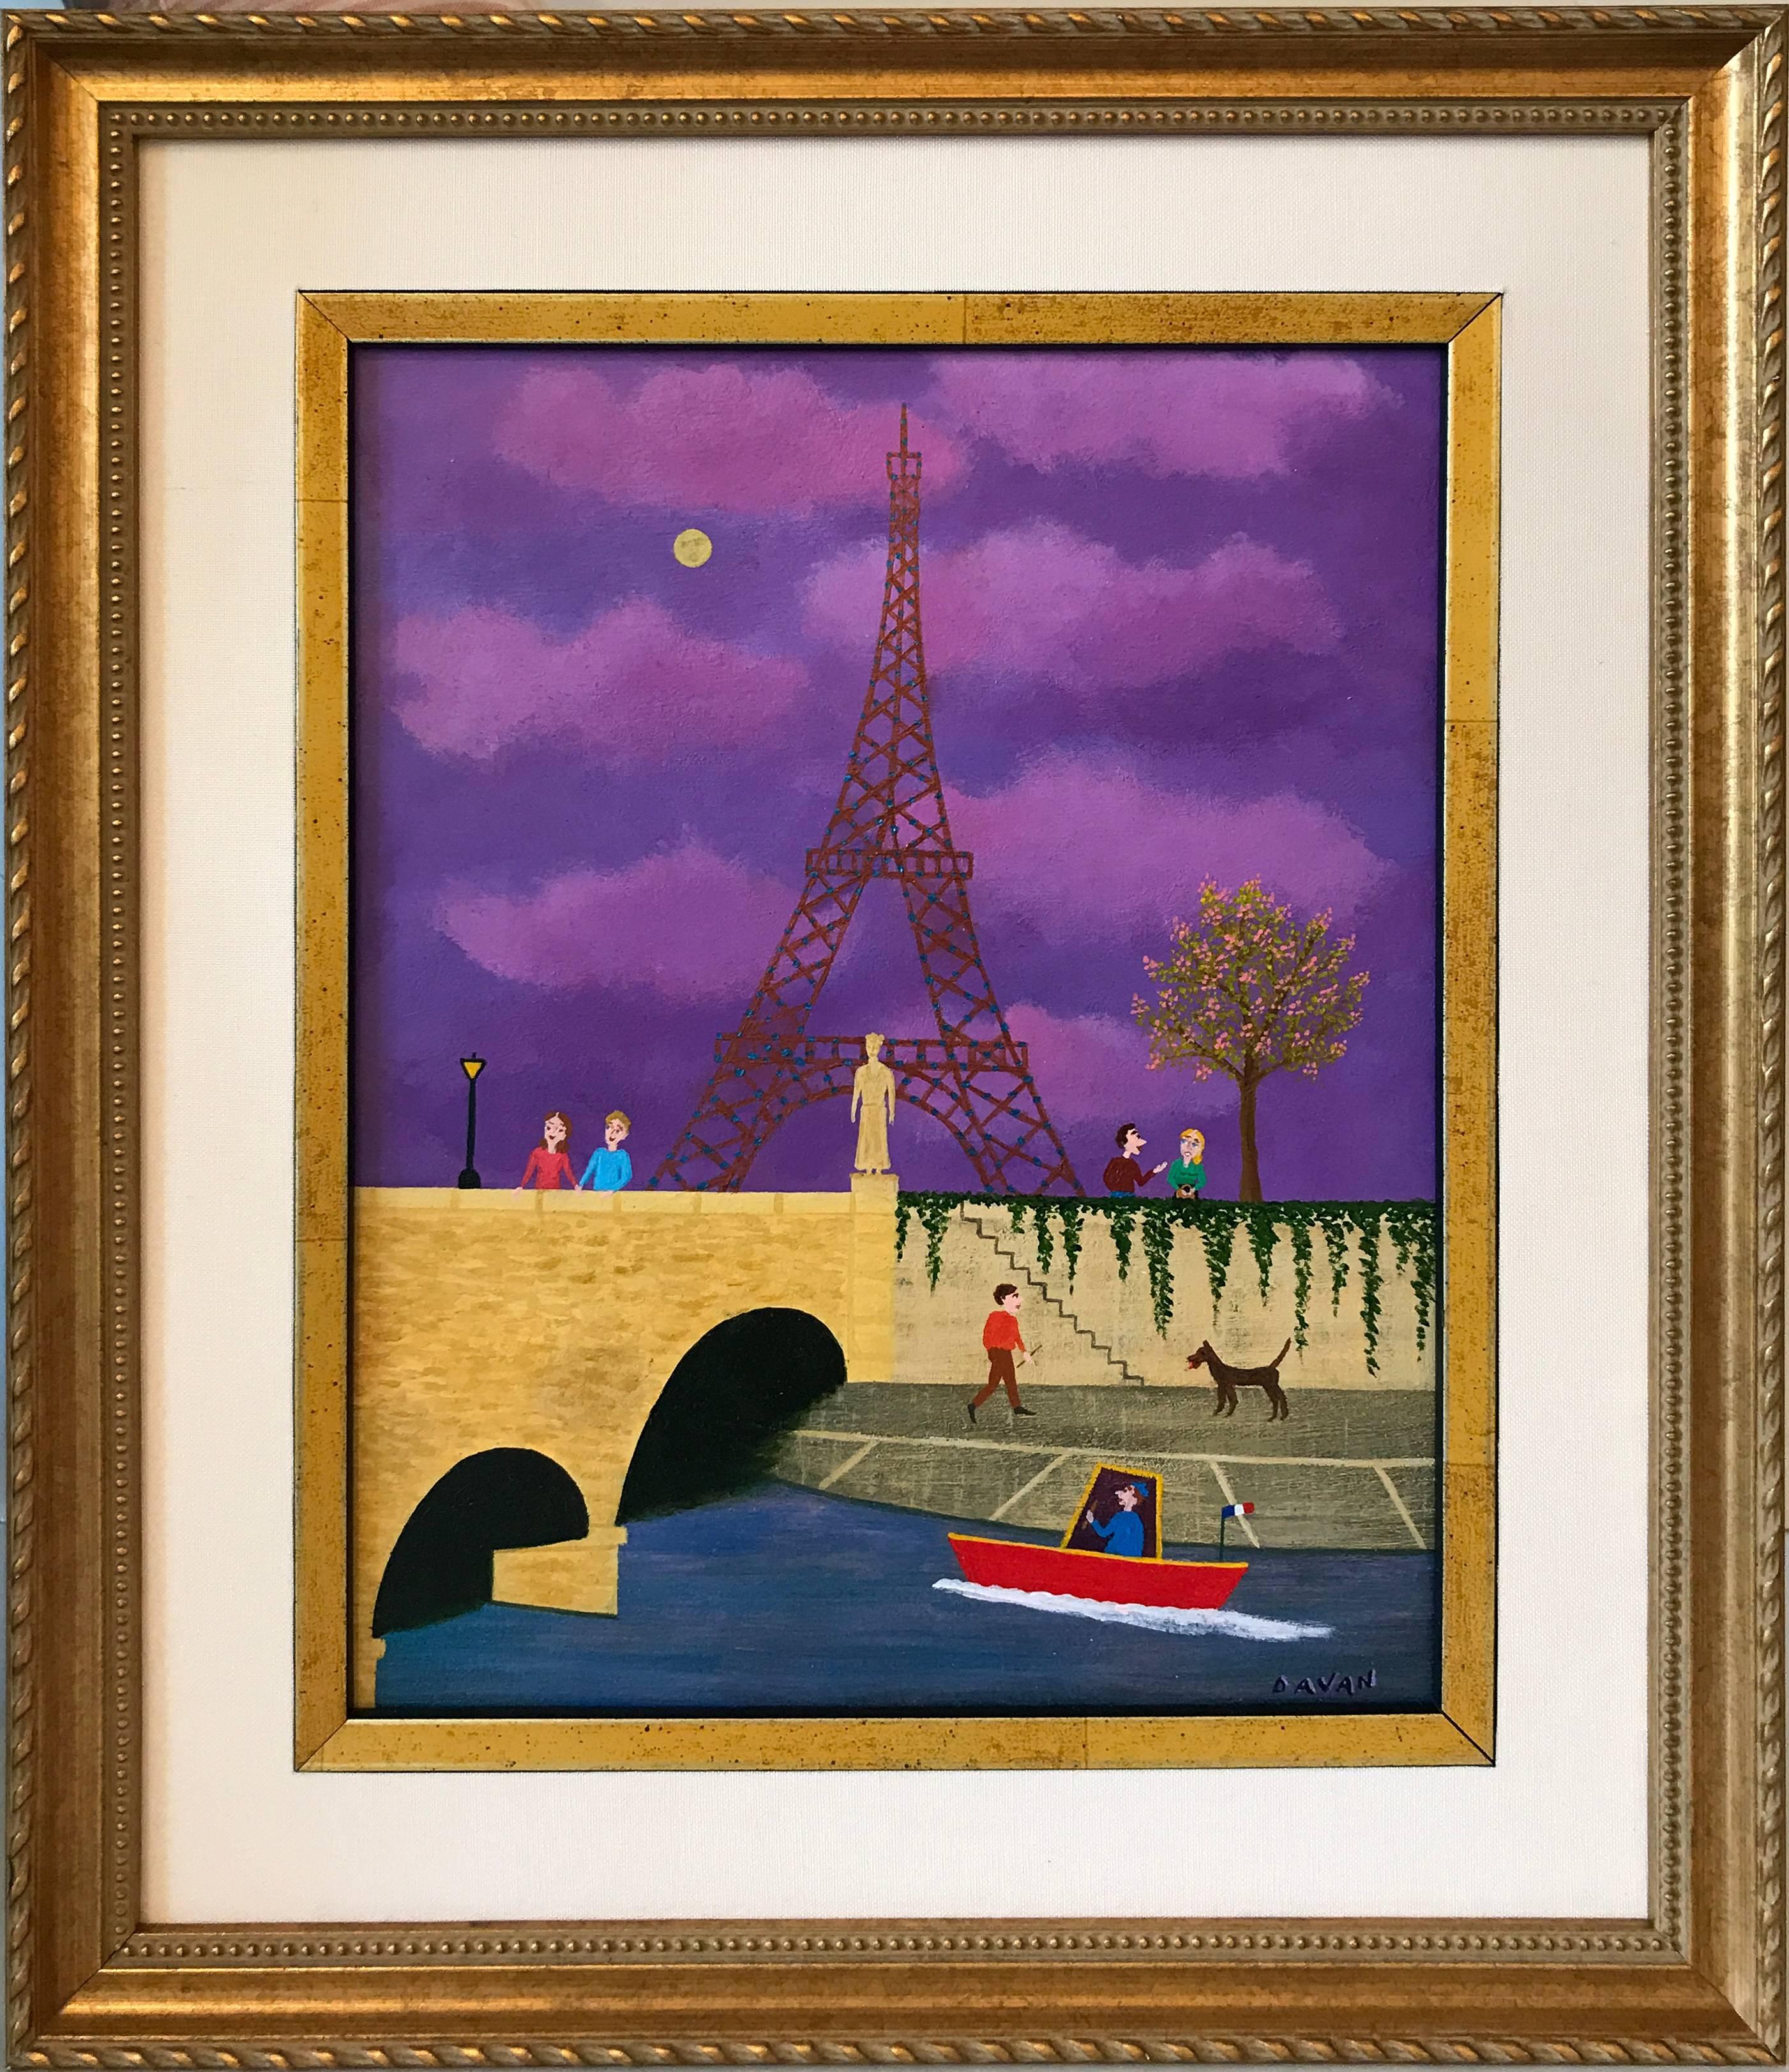 Full moon in Paris - Painting by Yohanna Wanda Davan